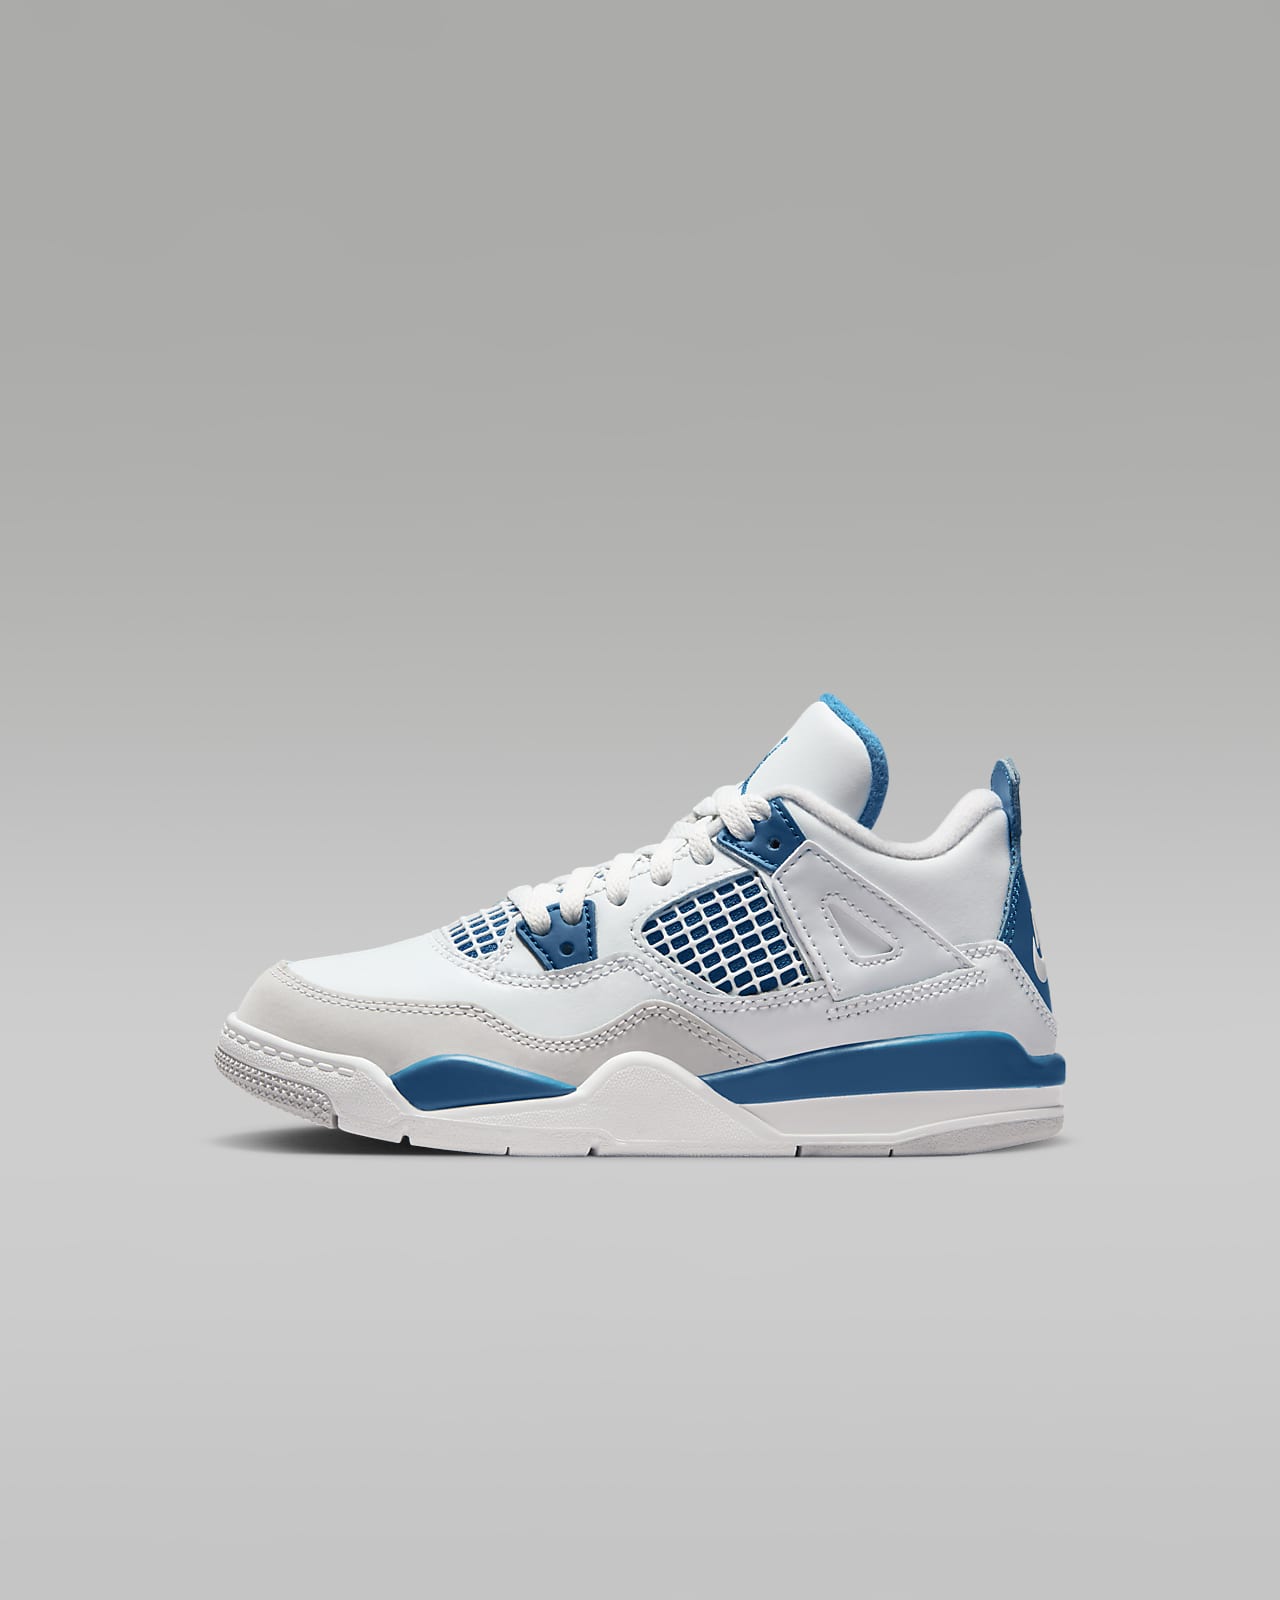 Jordan 4 Retro "Industrial Blue" Little Kids' Shoes